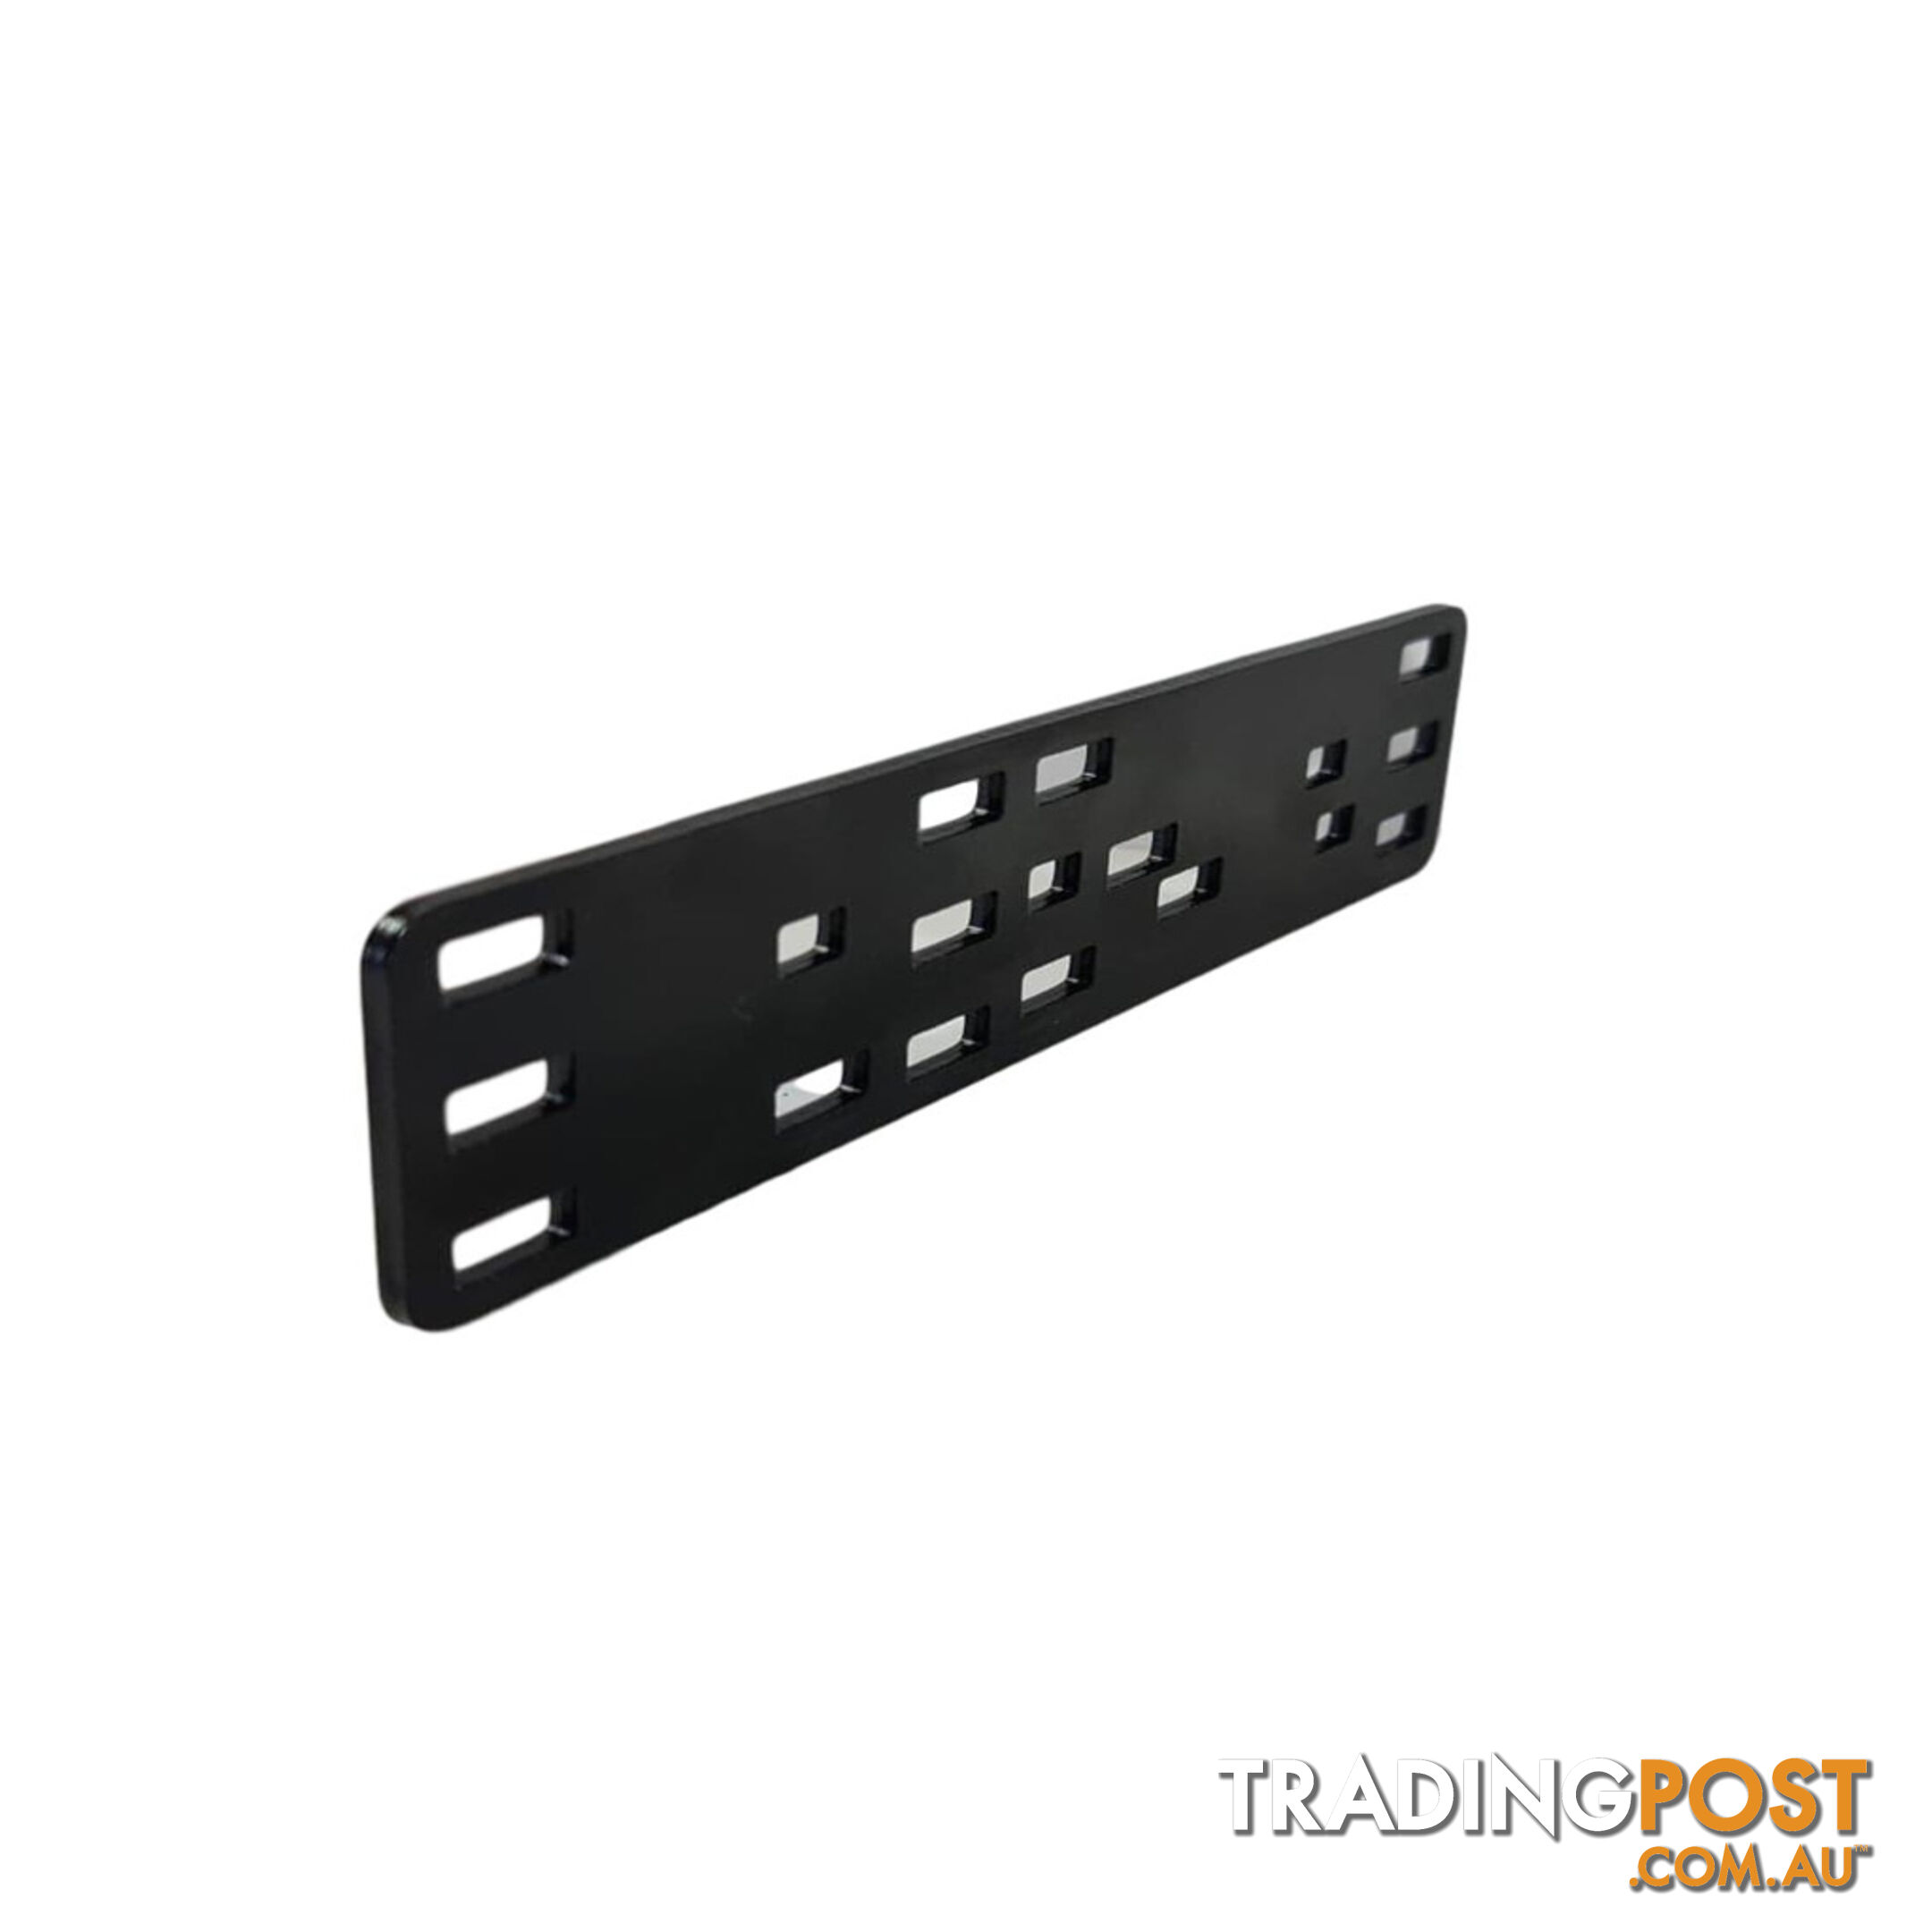 Trailer Vision Mounting Plate for 50 amp Anderson Plug   Flat Trailer Plug SKU - TV17689-B